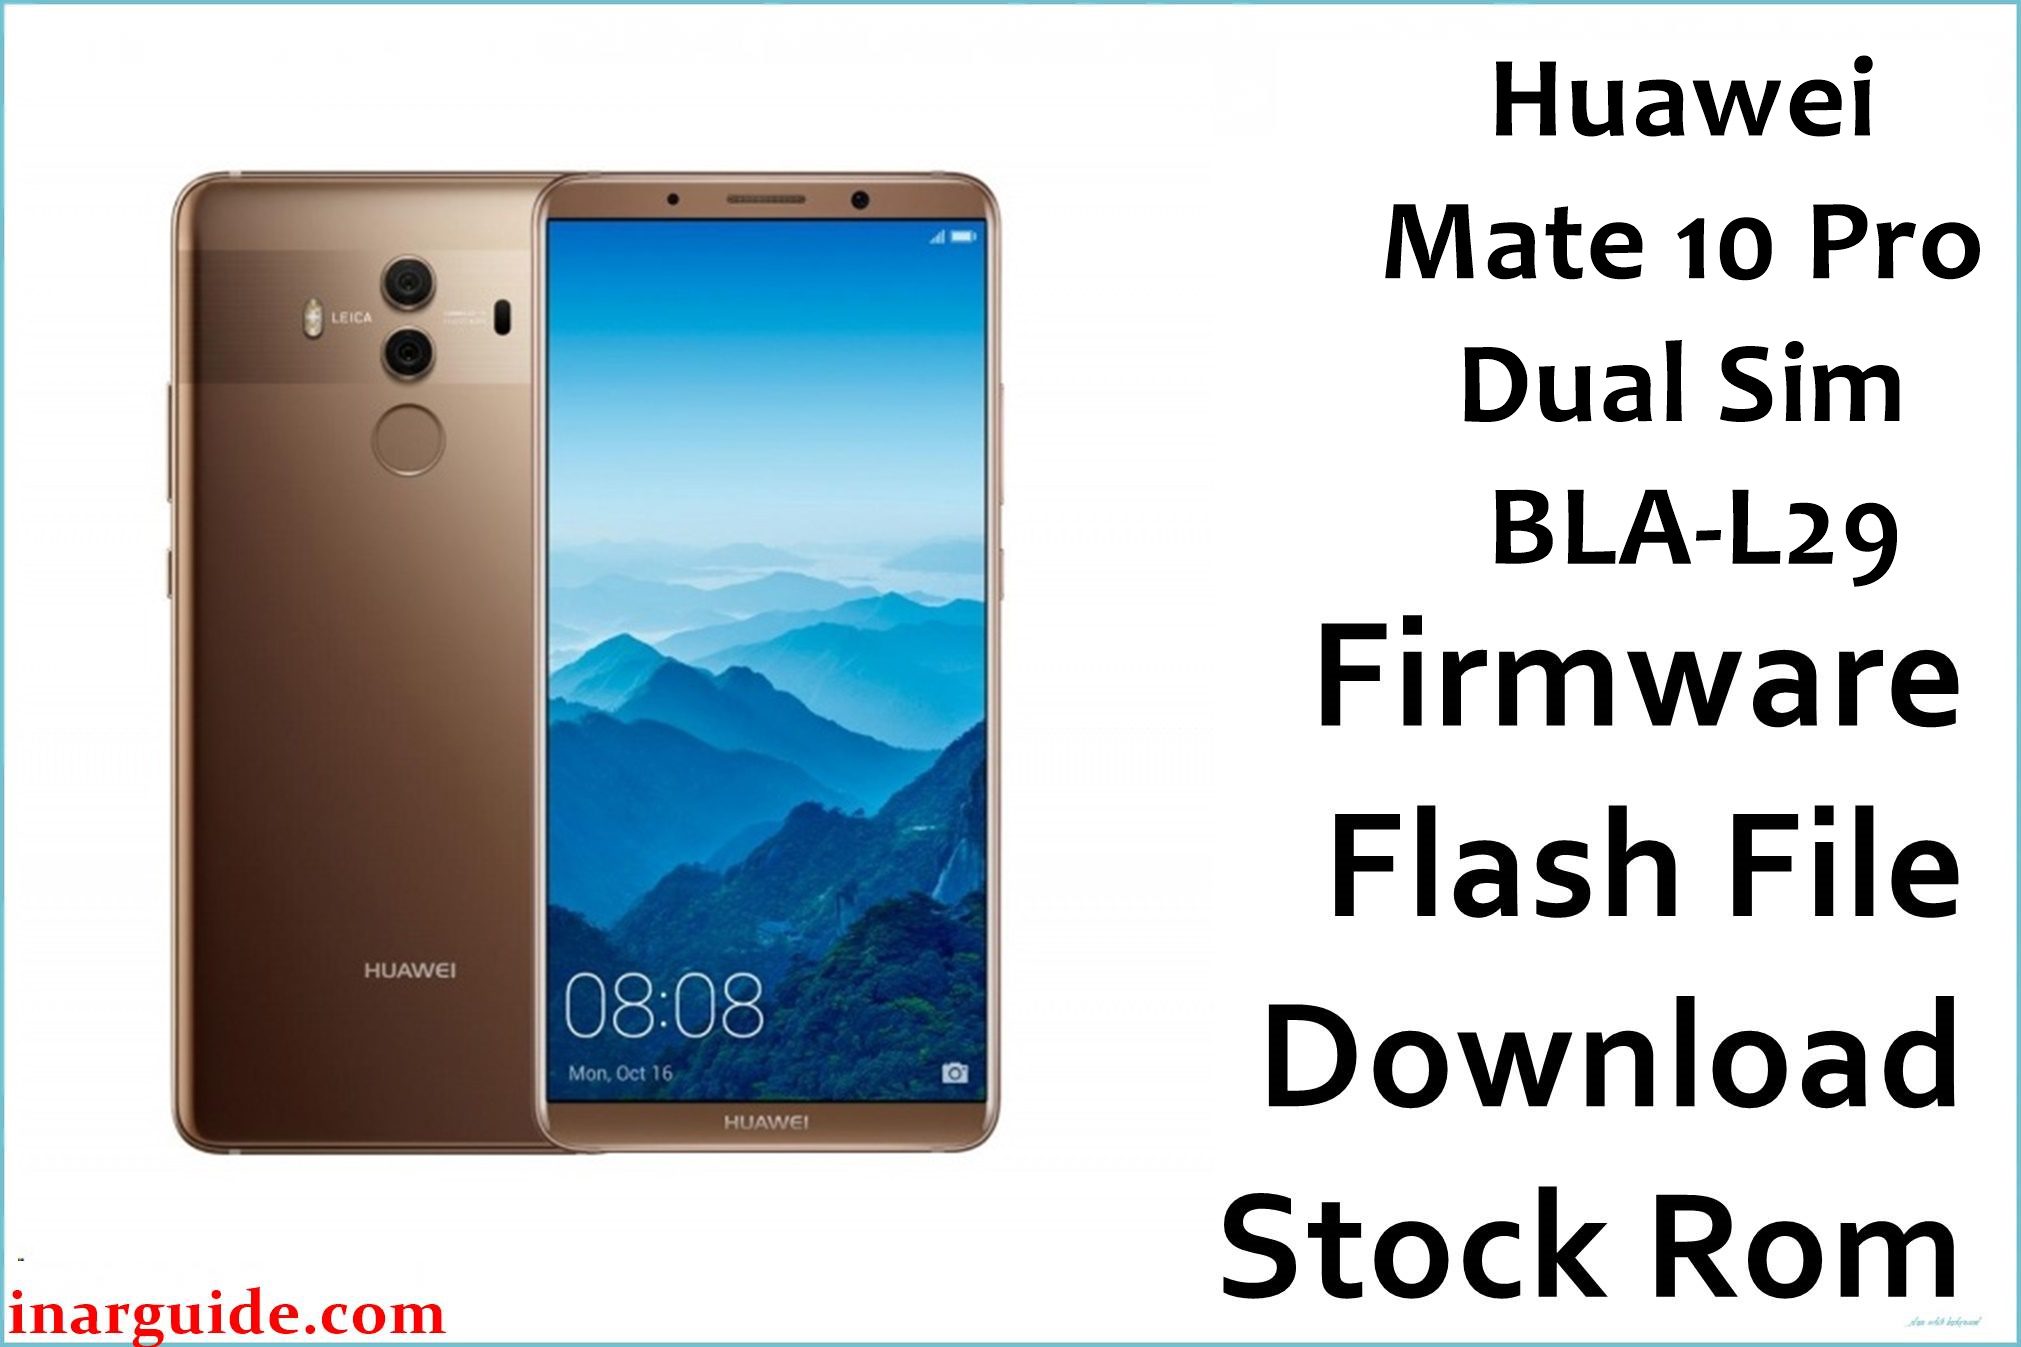 Huawei Mate 10 Pro Dual Sim BLA L29